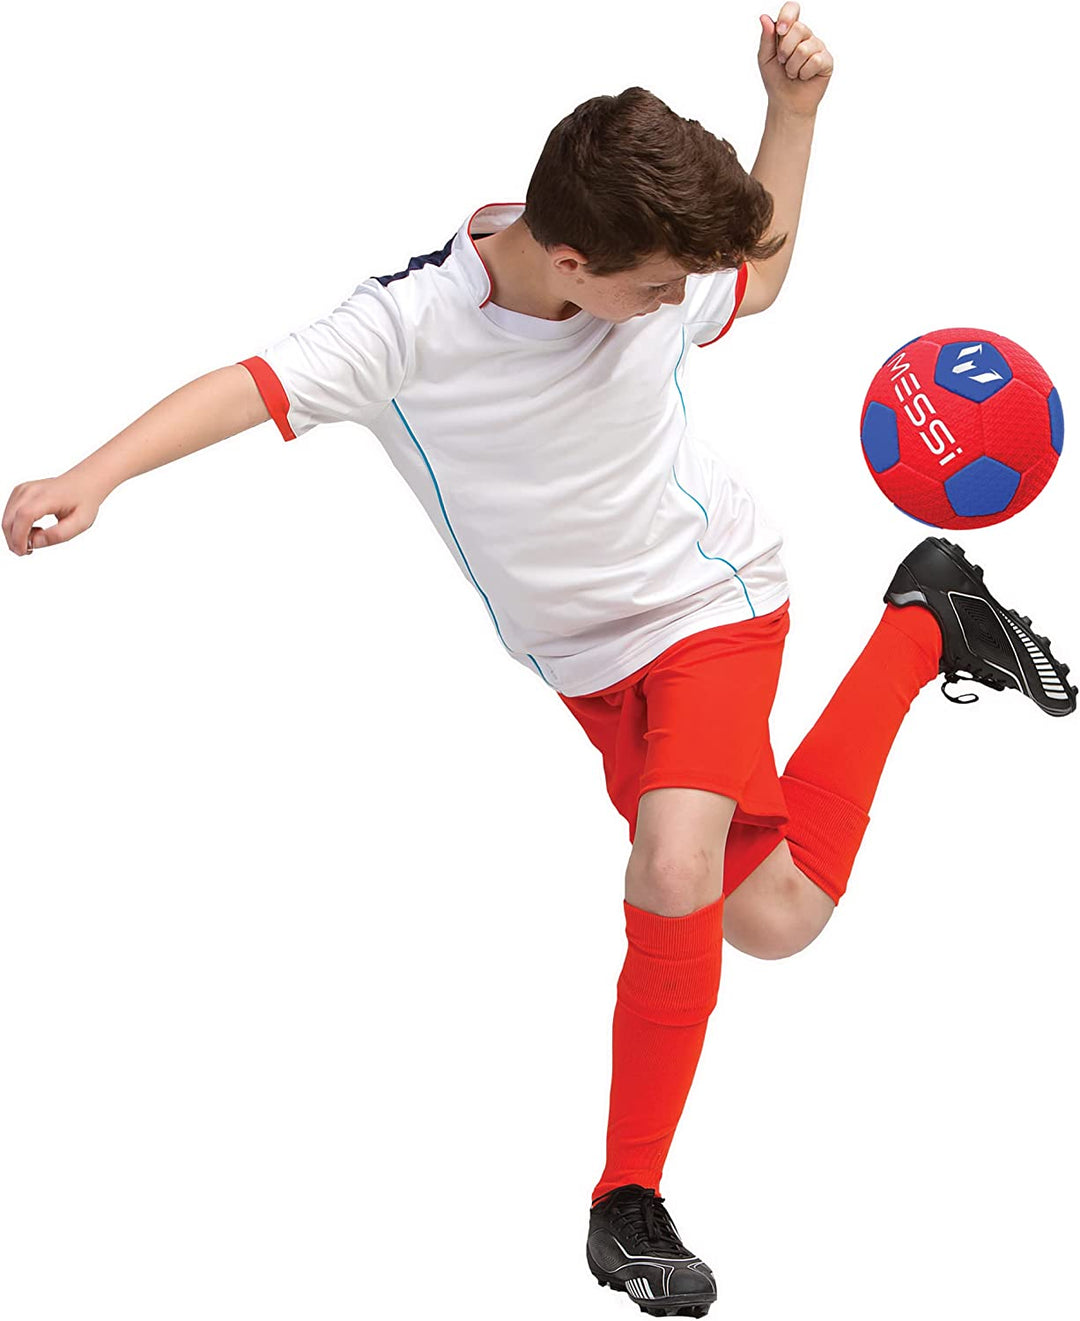 Messi Training System Flexi Pro Size 5 Football